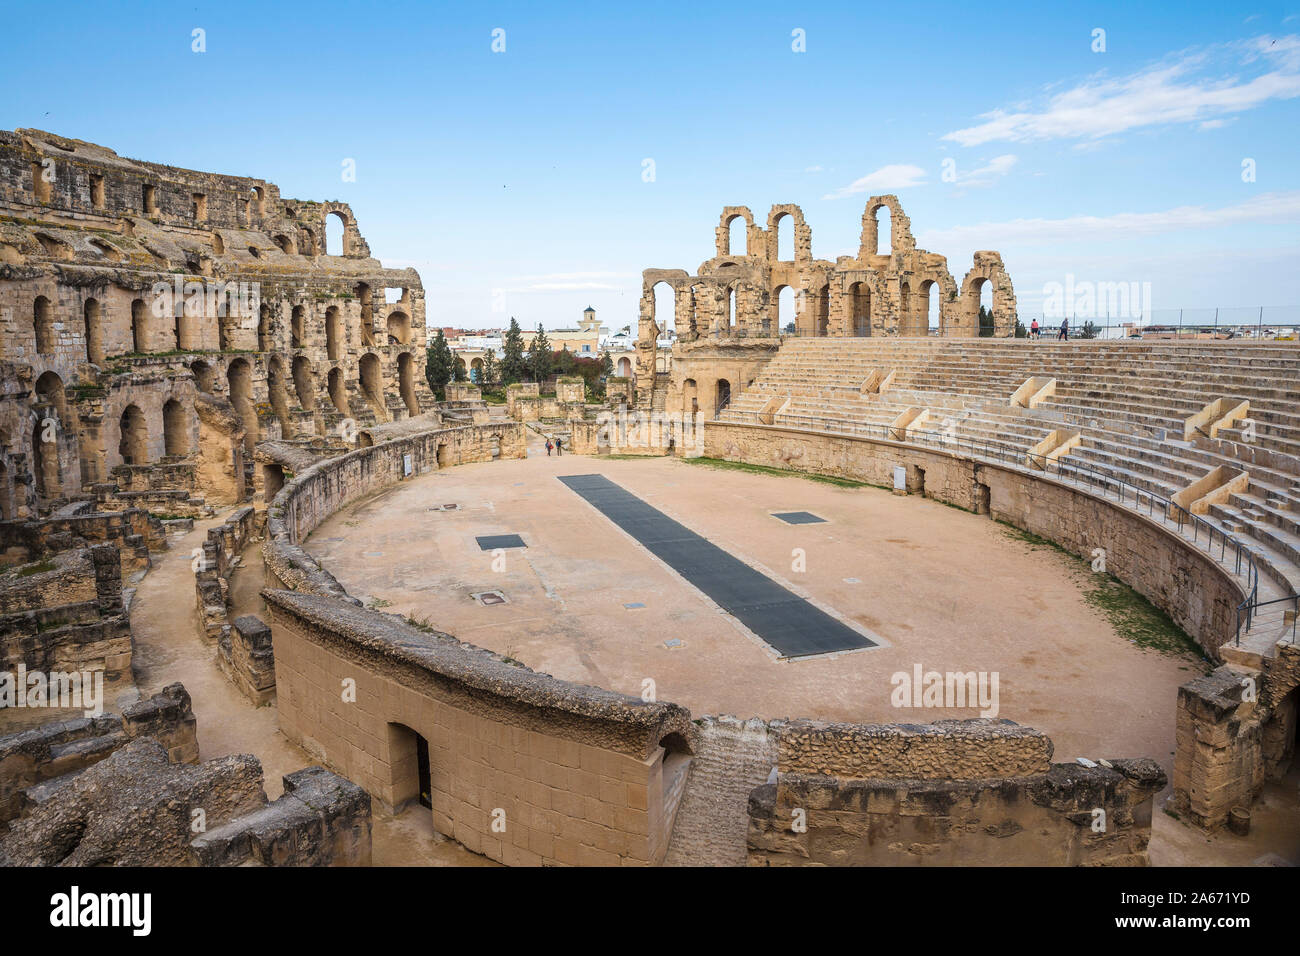 Tunisia, El Jem, Roman Amphitheatre Stock Photo